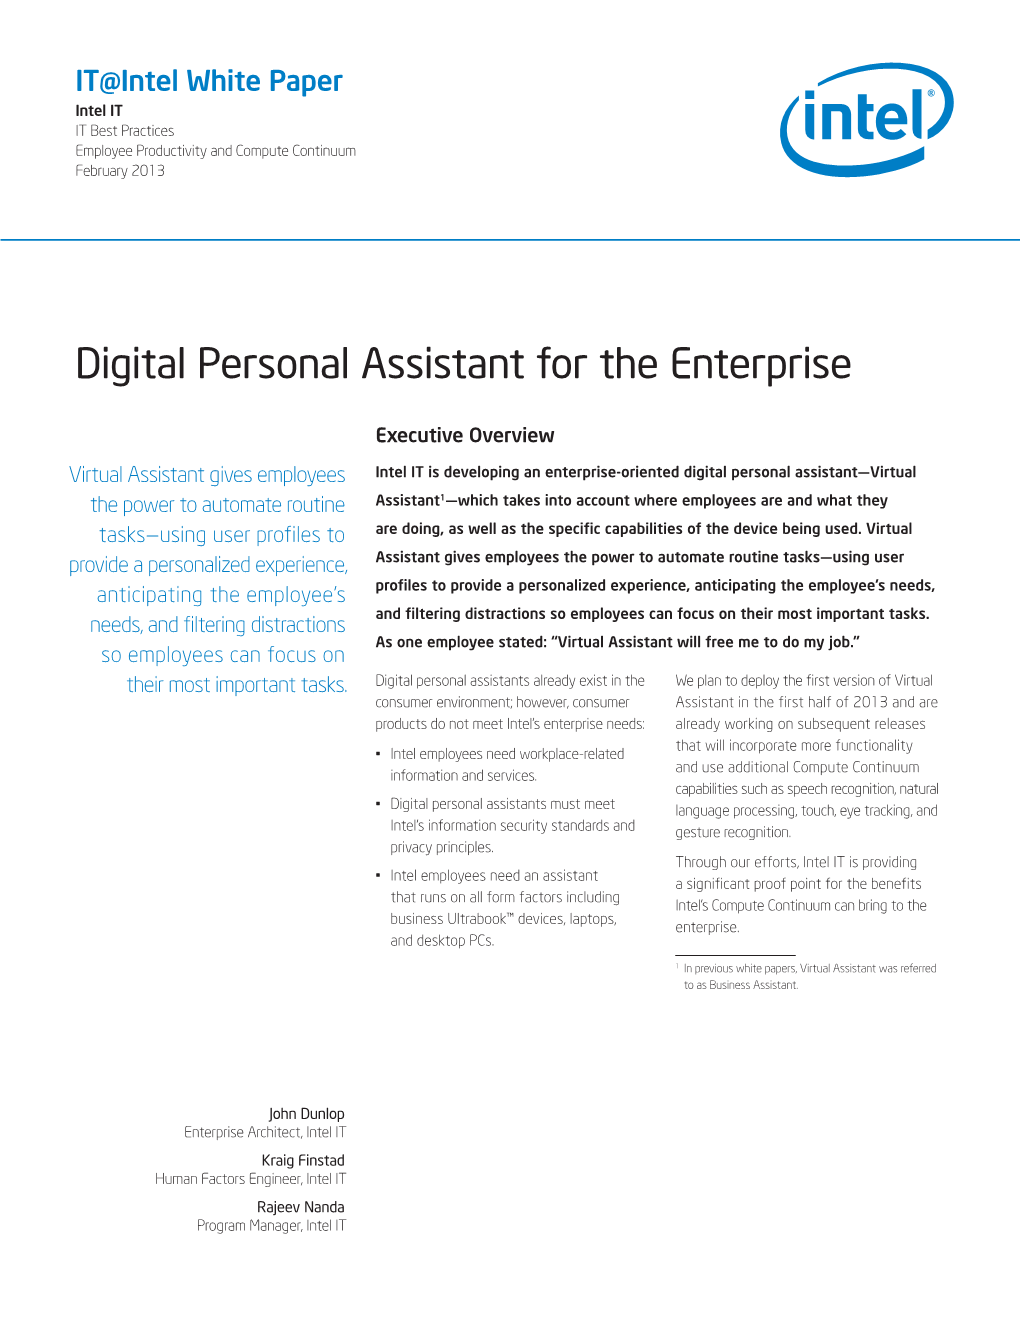 Digital Personal Assistant for the Enterprise